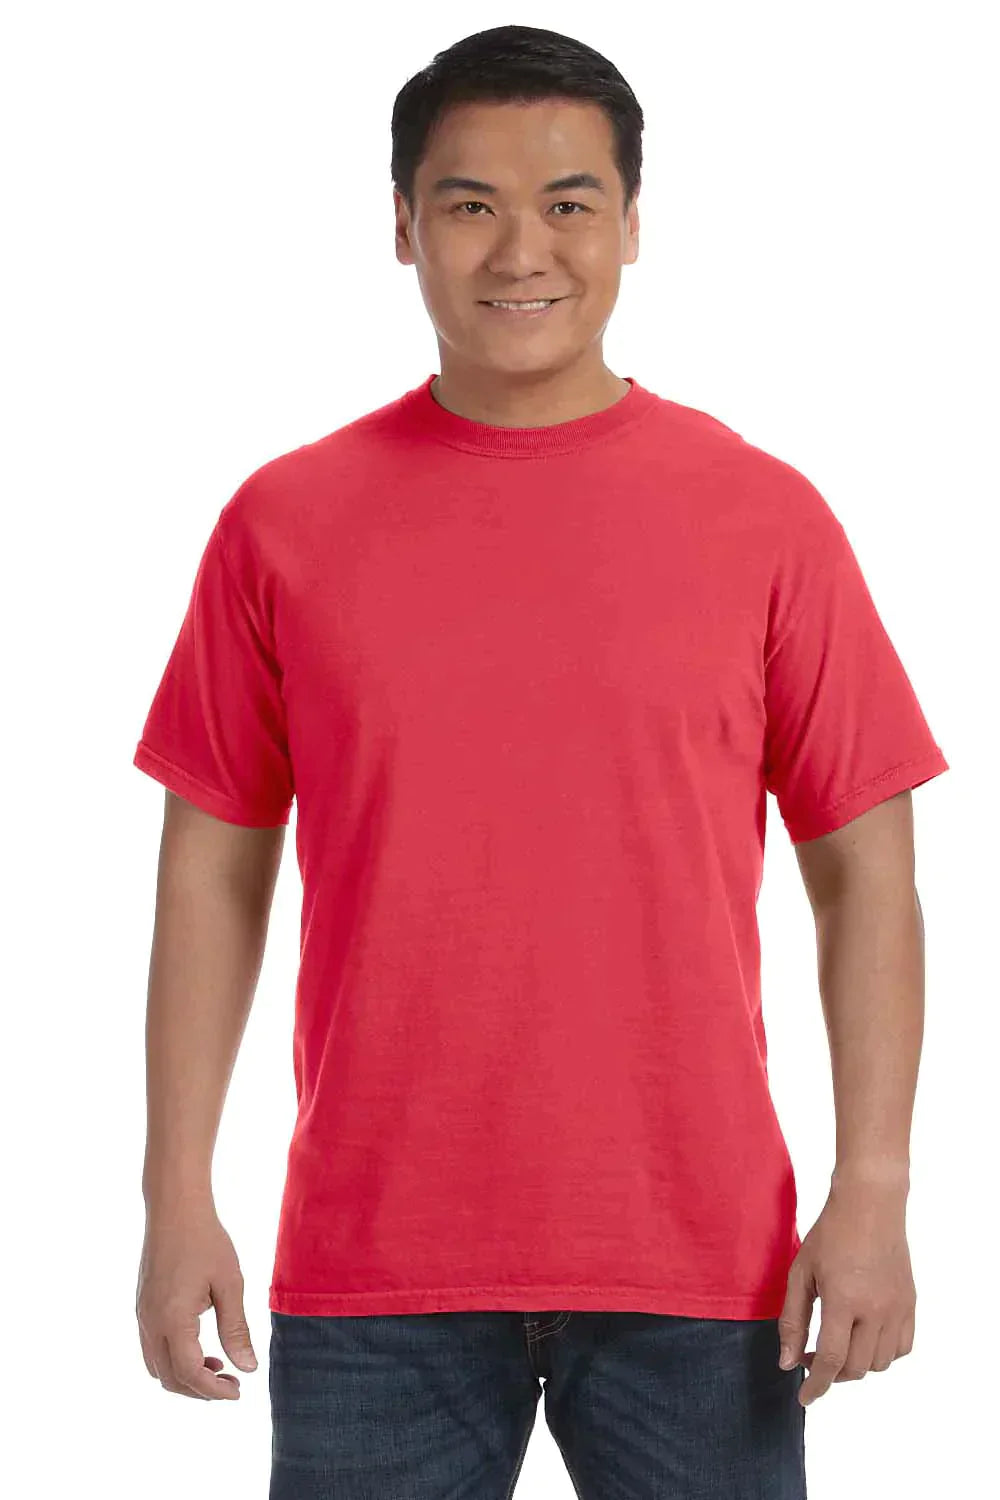 Sample GLOW IN THE DARK T-Shirt